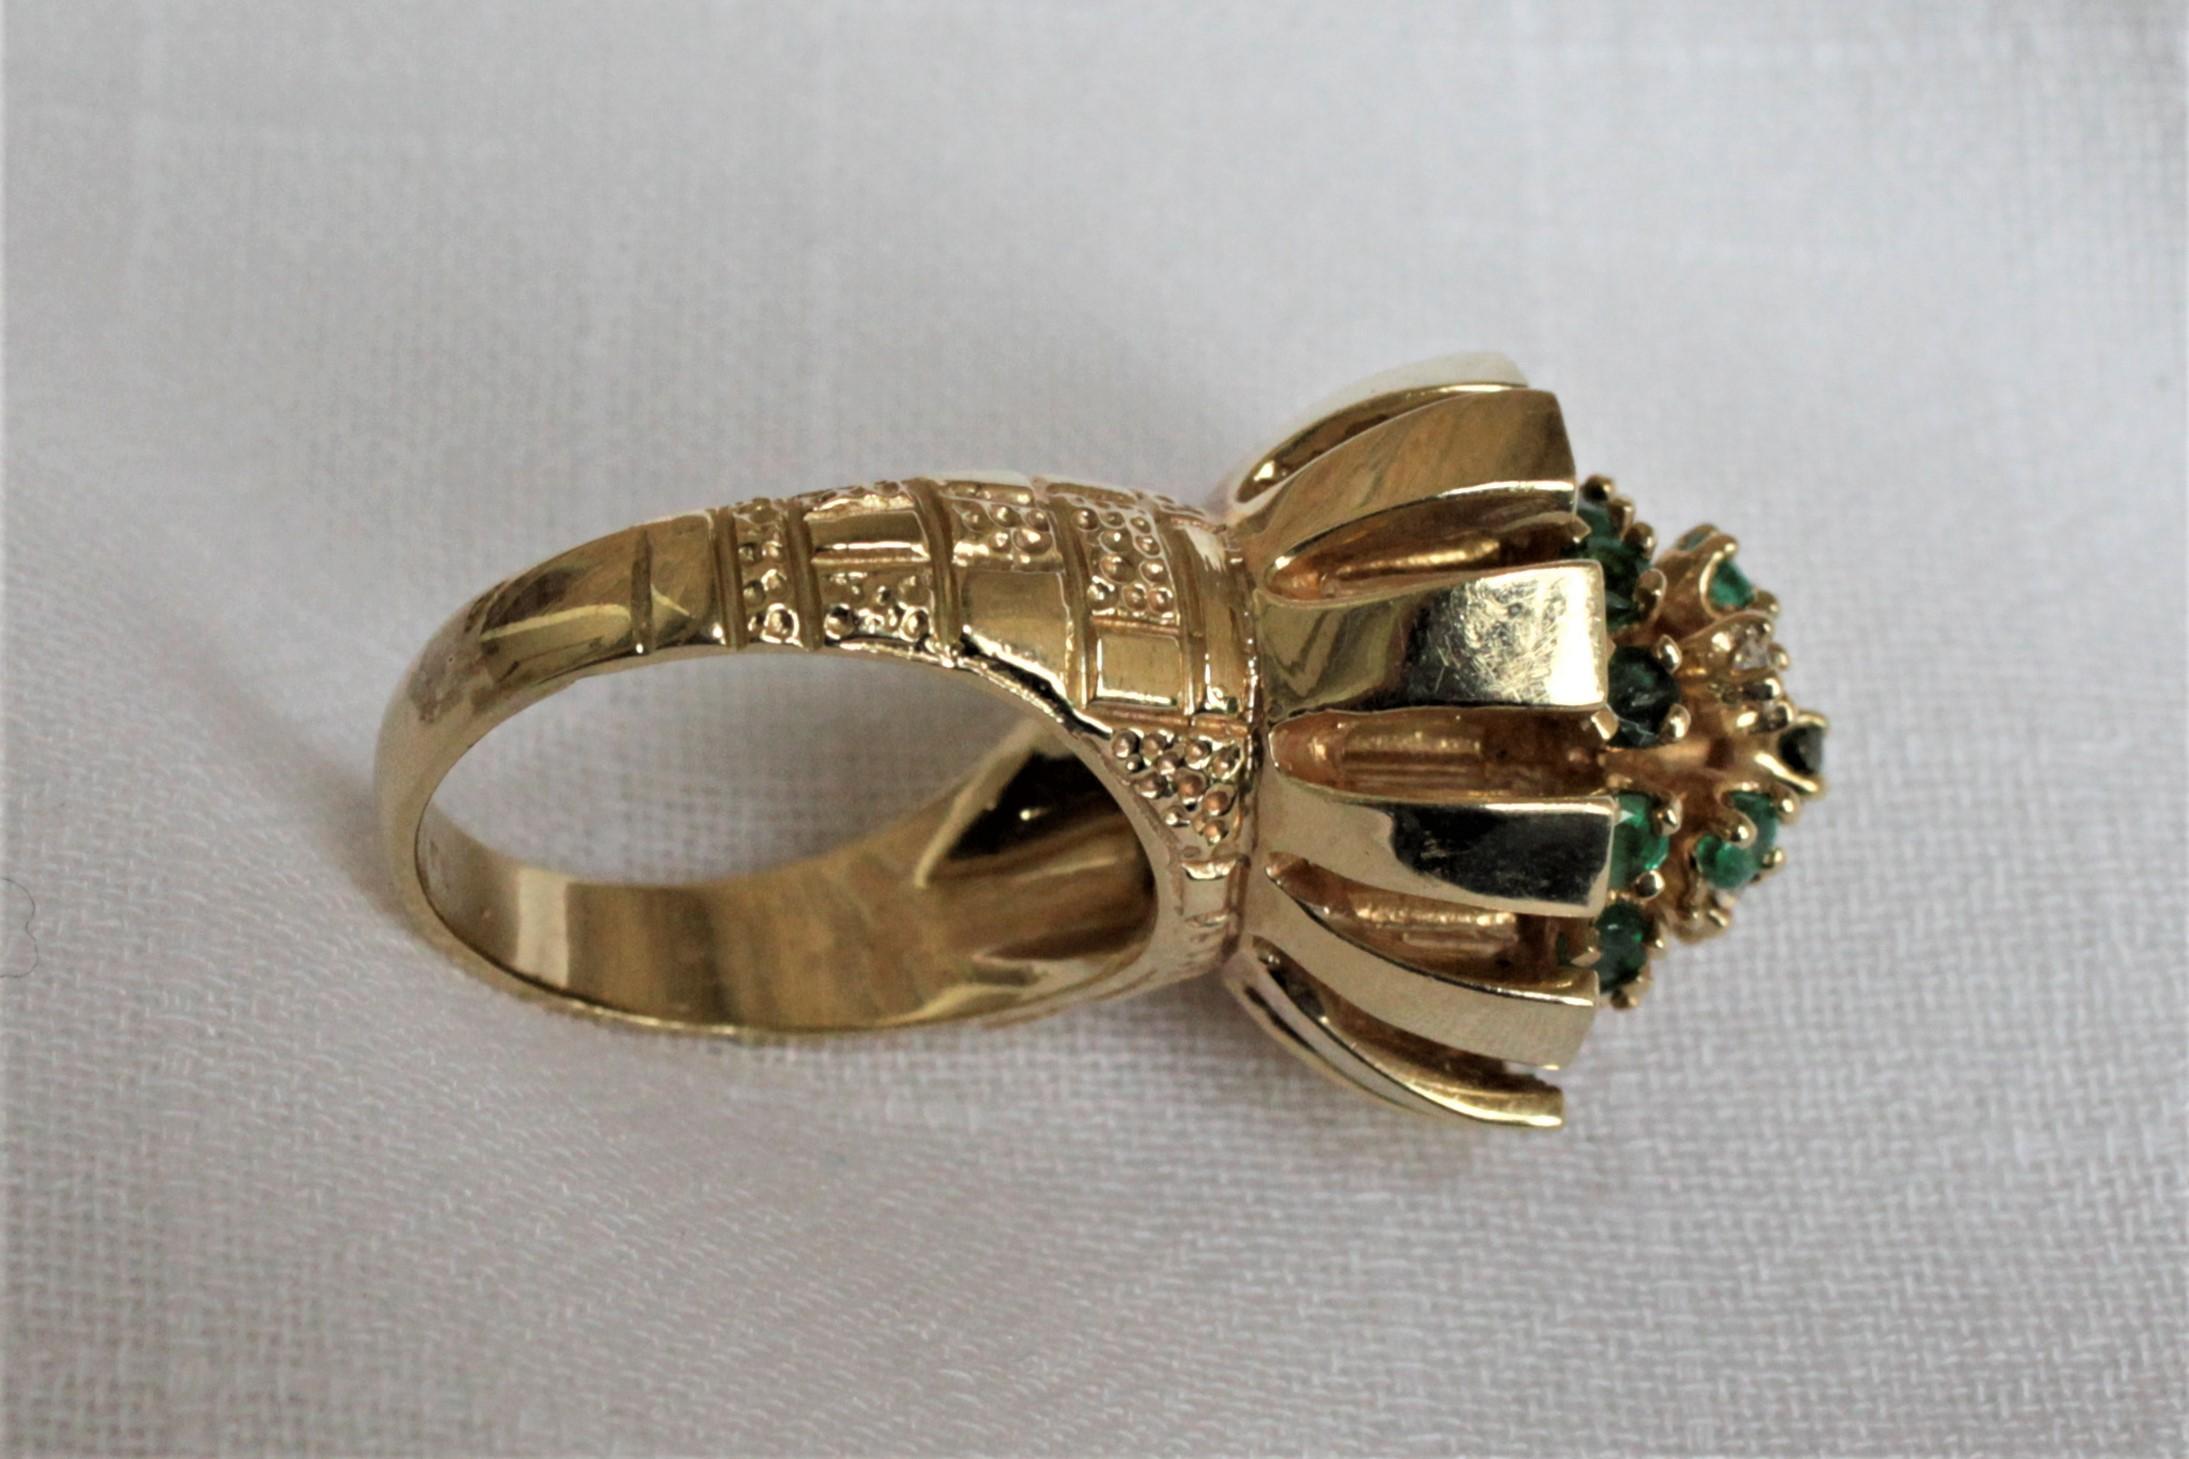 20th Century Large Ladies 14-Karat Yellow Gold Cocktail Ring with Diamonds, Emeralds & Beryls